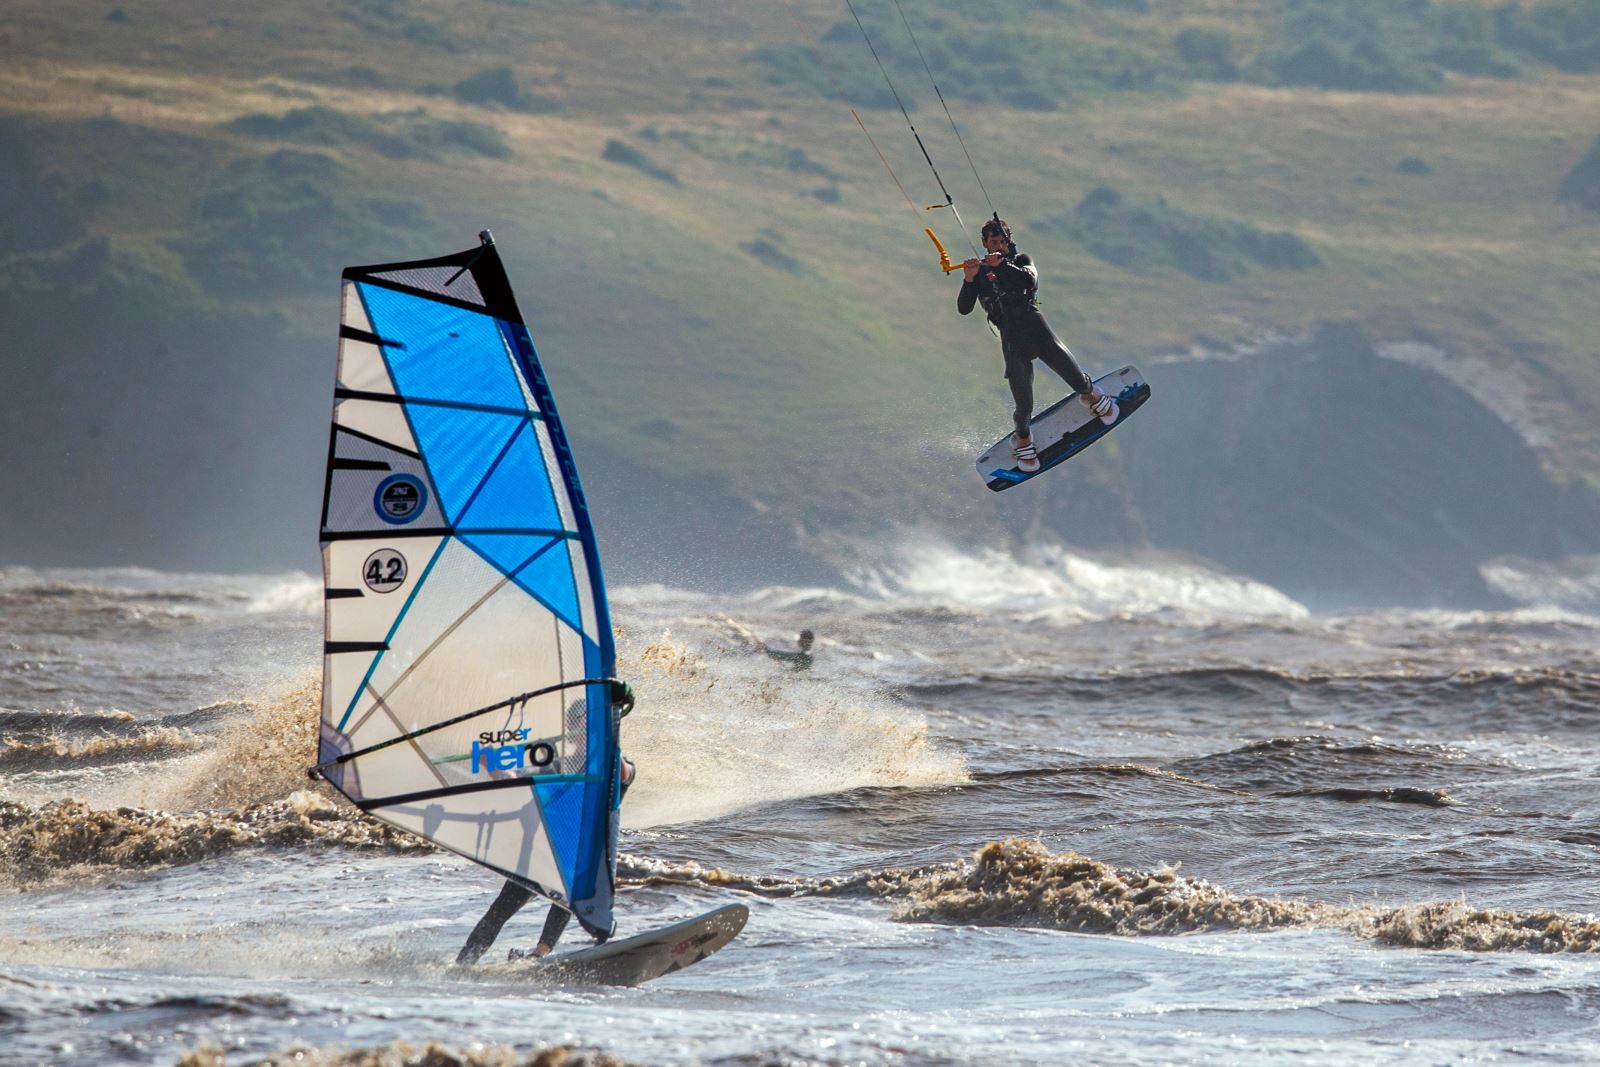 A kite surfer rides above a windsurfer